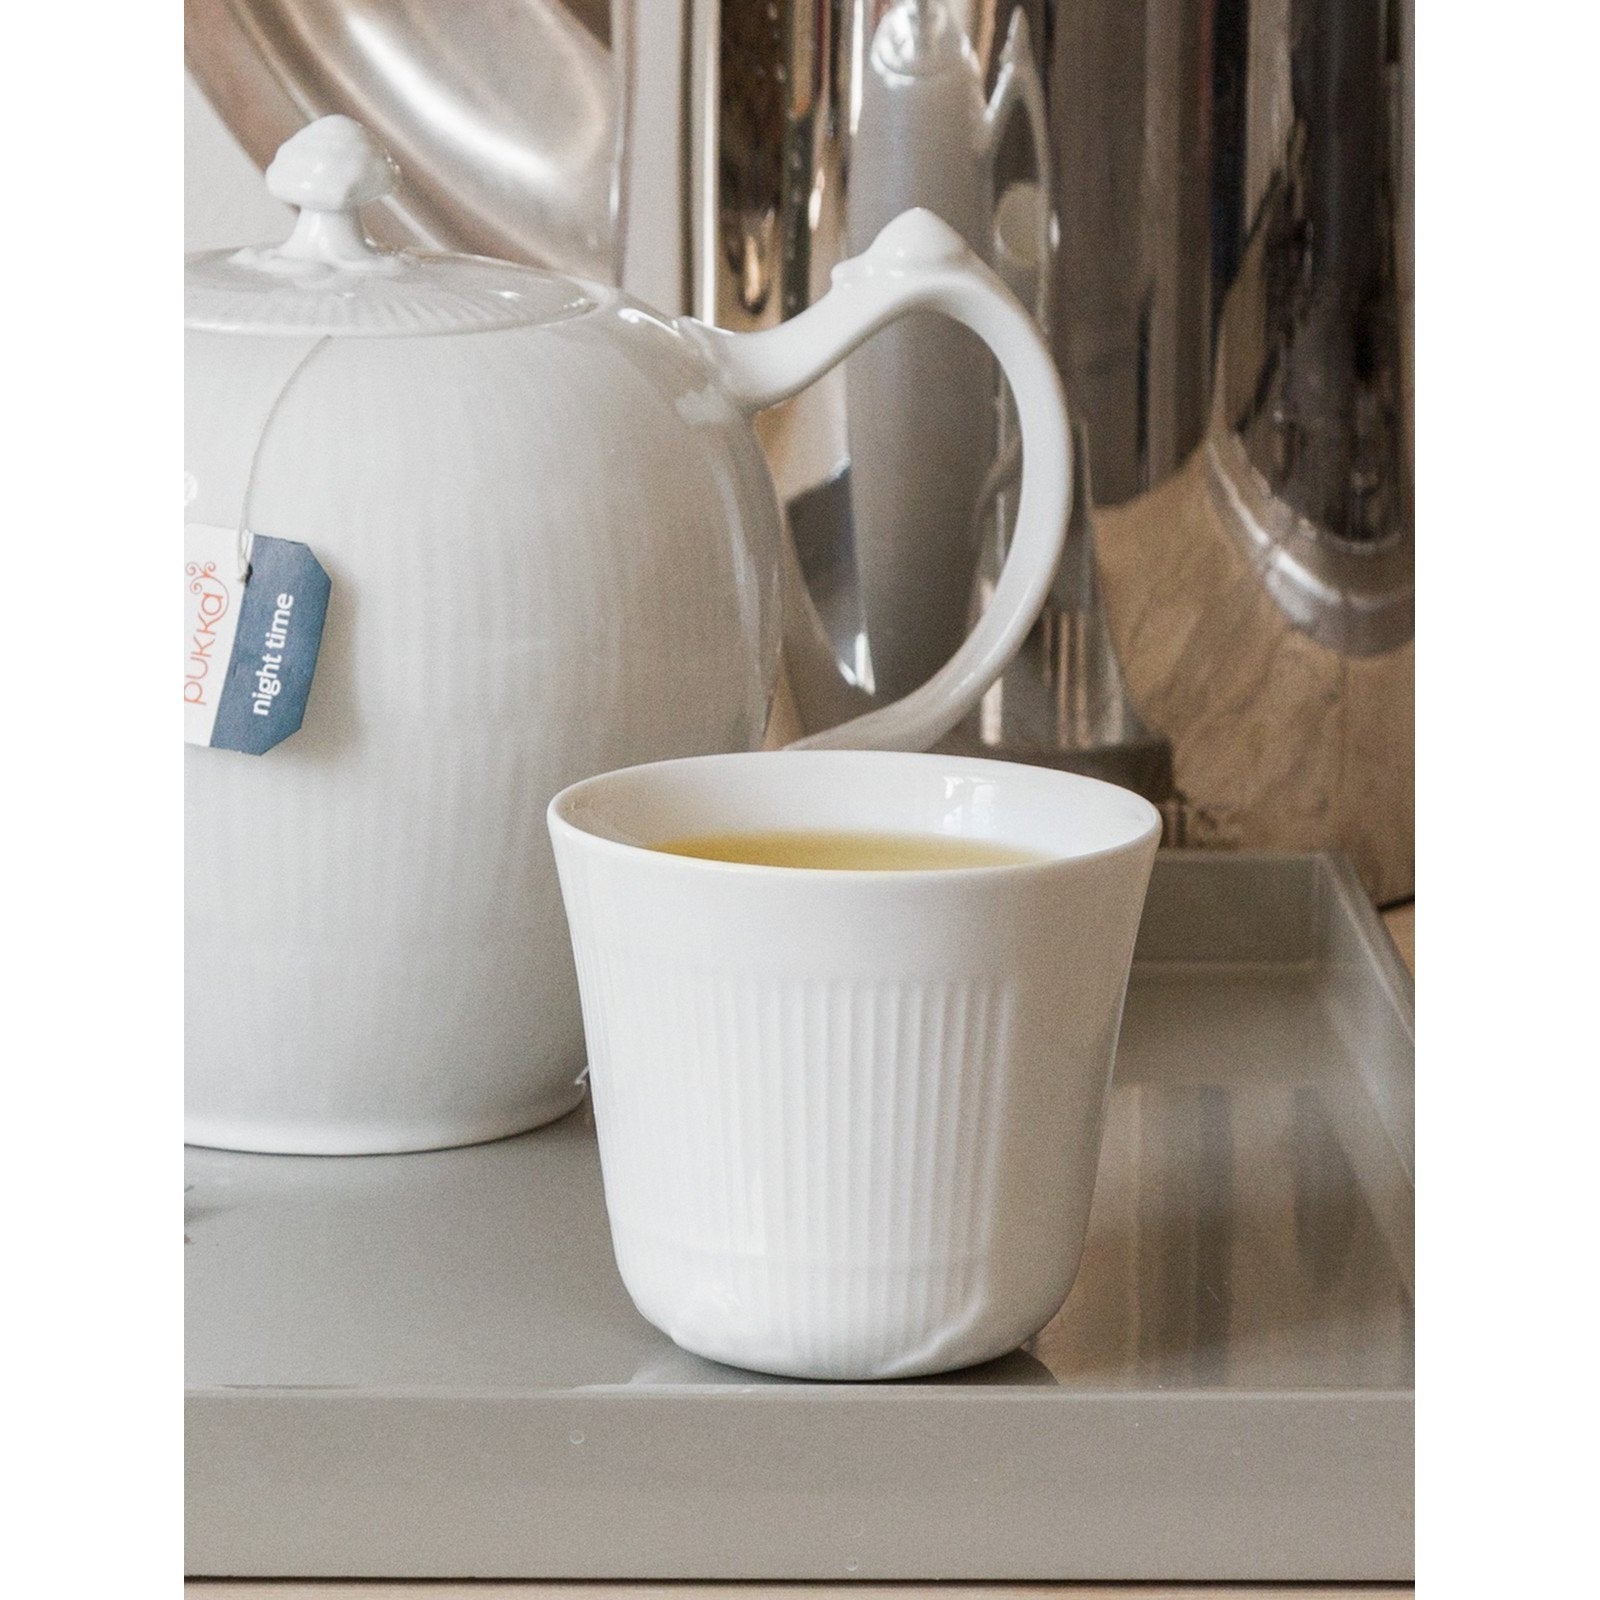 Royal Copenhagen White Fluted Teapot, 100cl